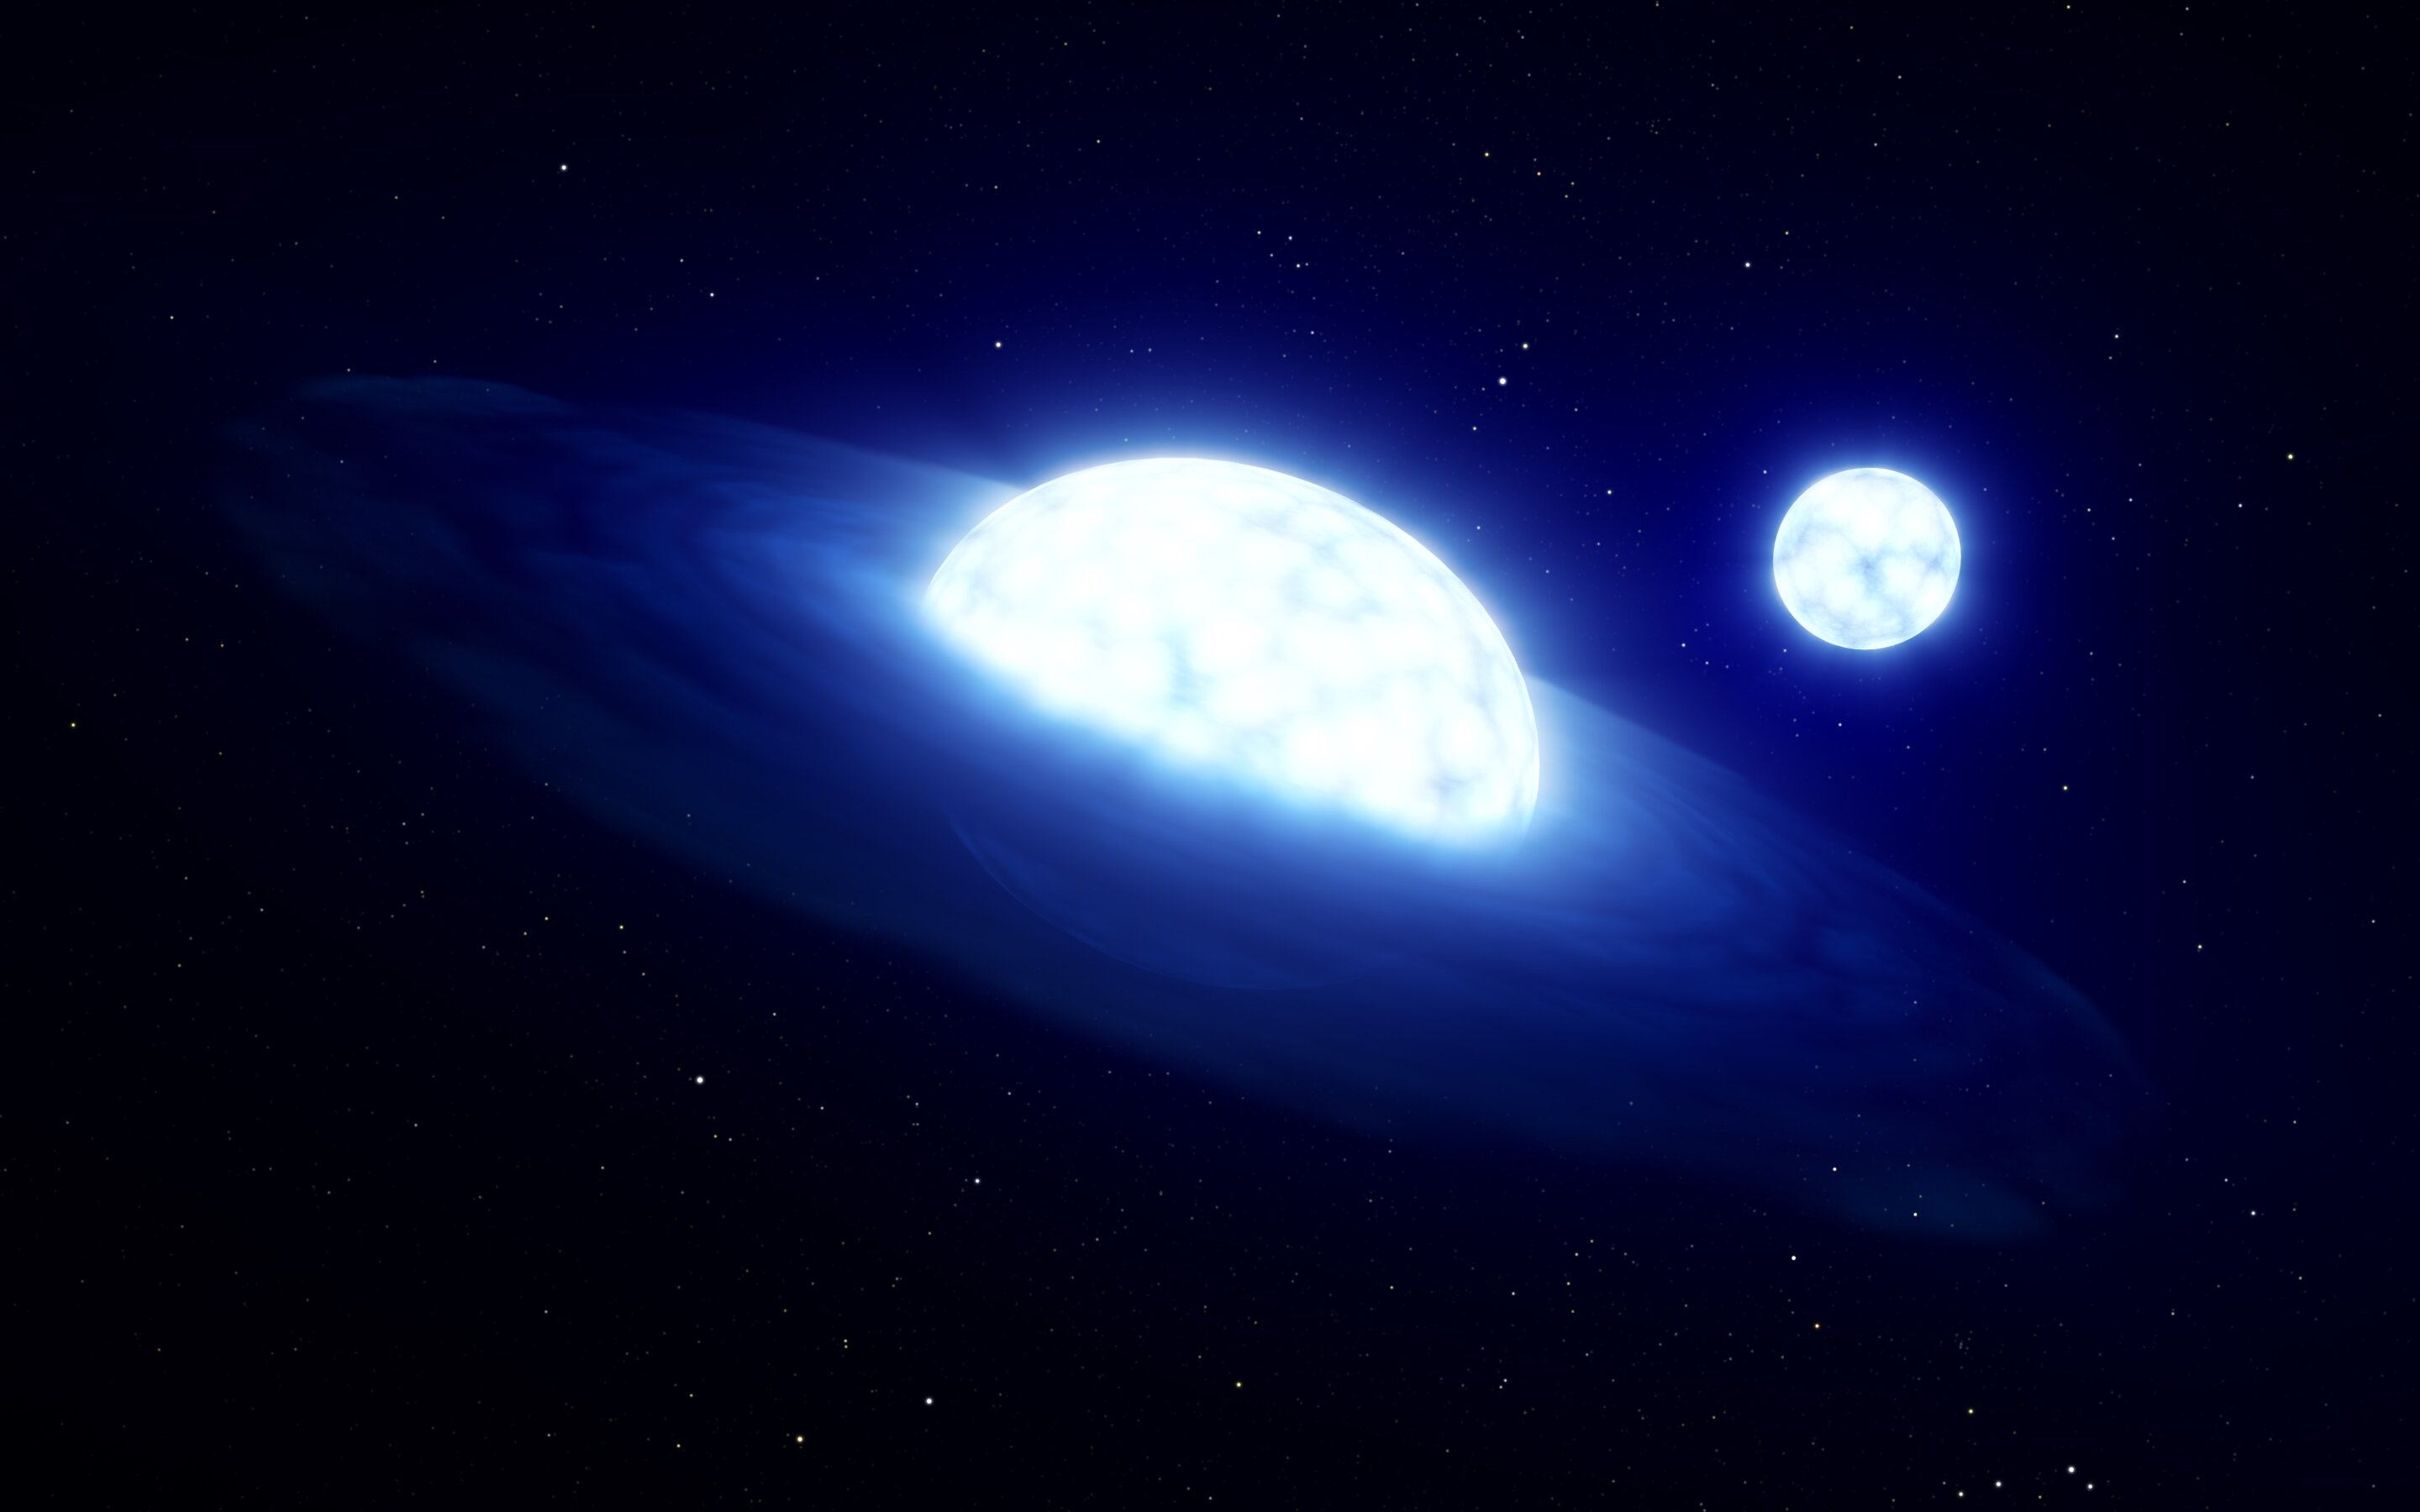 ‘Triple star’ discovery could revolutionize understanding of stellar evolution